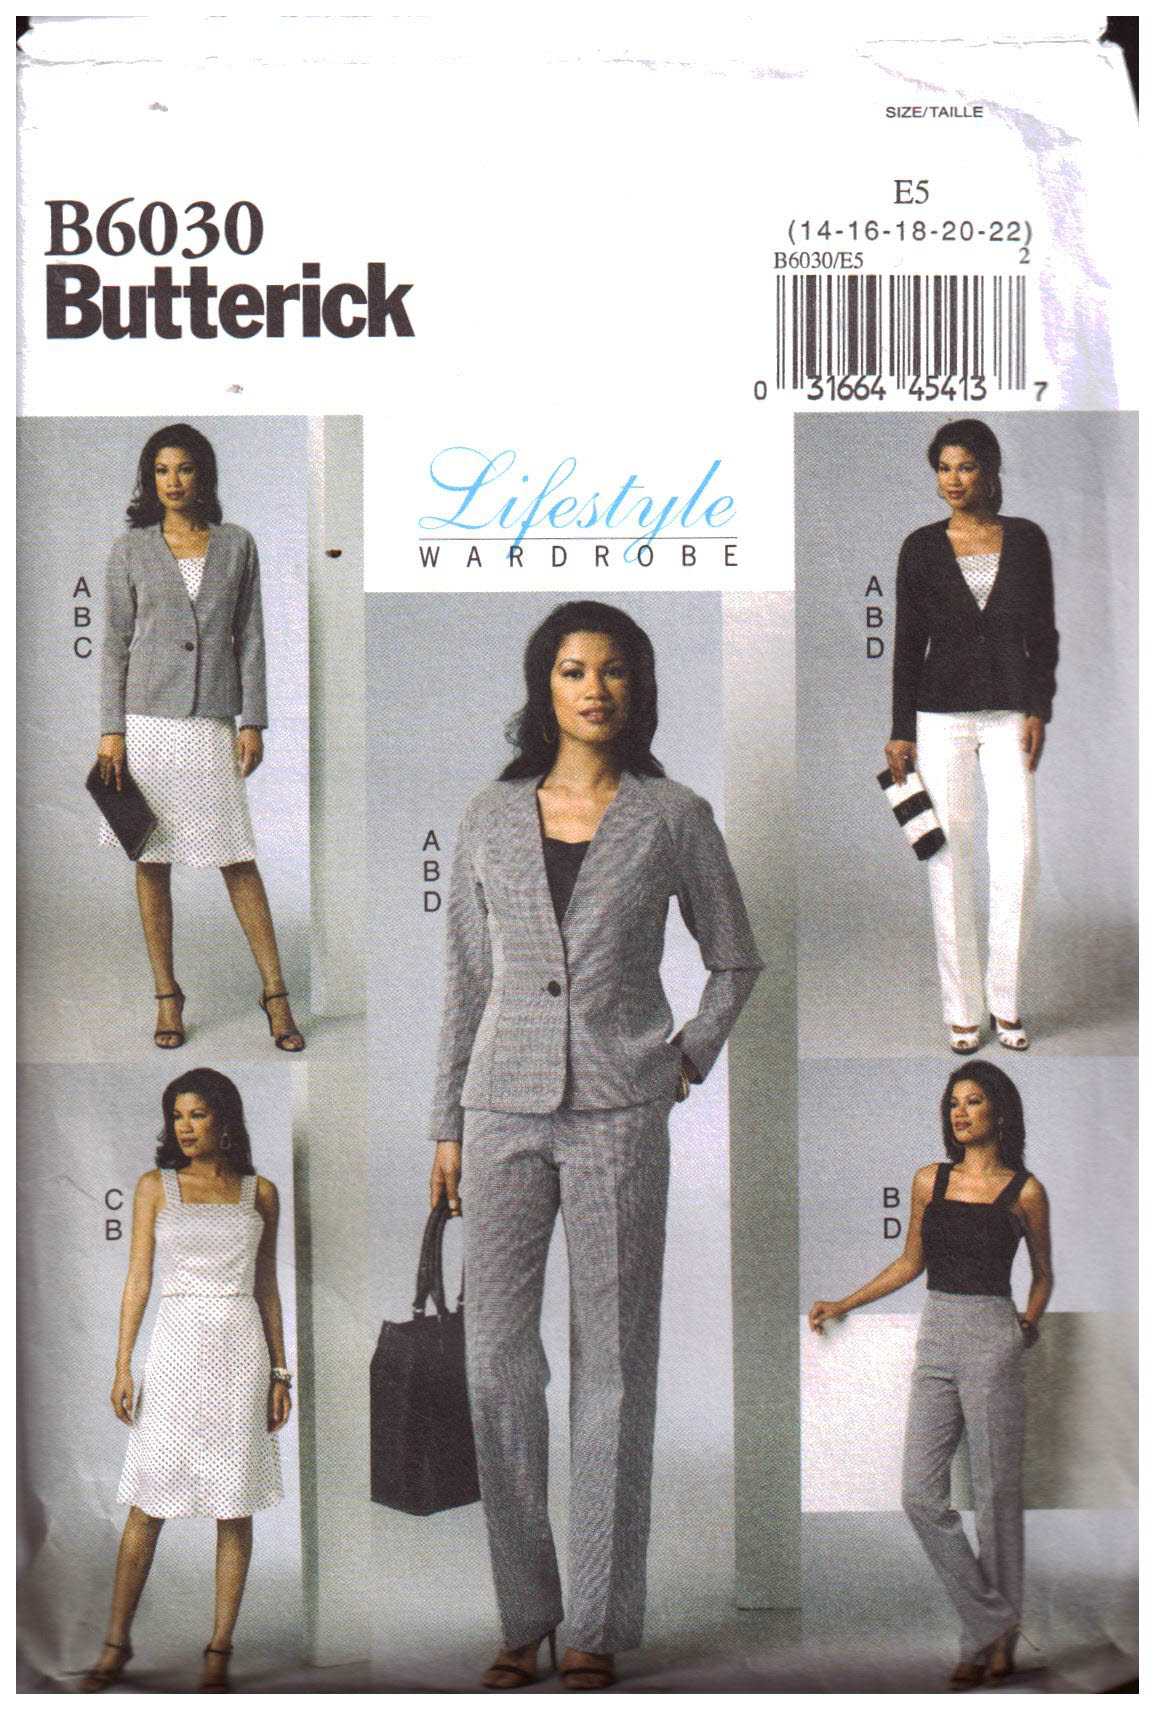 Butterick 4355 Jacket Blazer Top Shift Sheath Dress Skirt Pants Pattern Size 16 18 20 22 Career Wardrobe Fitted Lined Mid Knee UNCUT